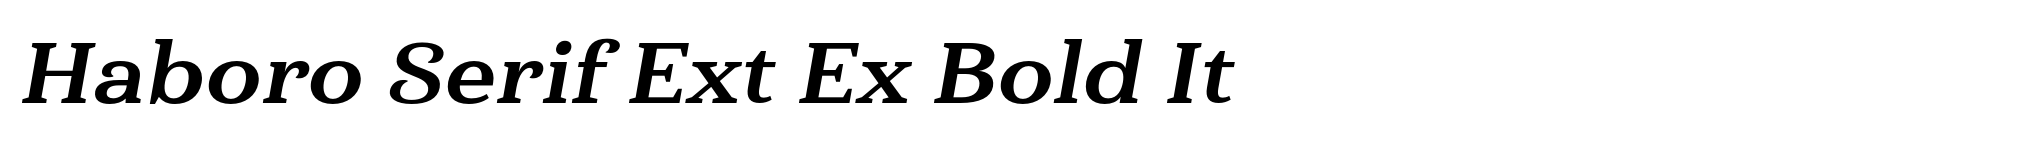 Haboro Serif Ext Ex Bold It image